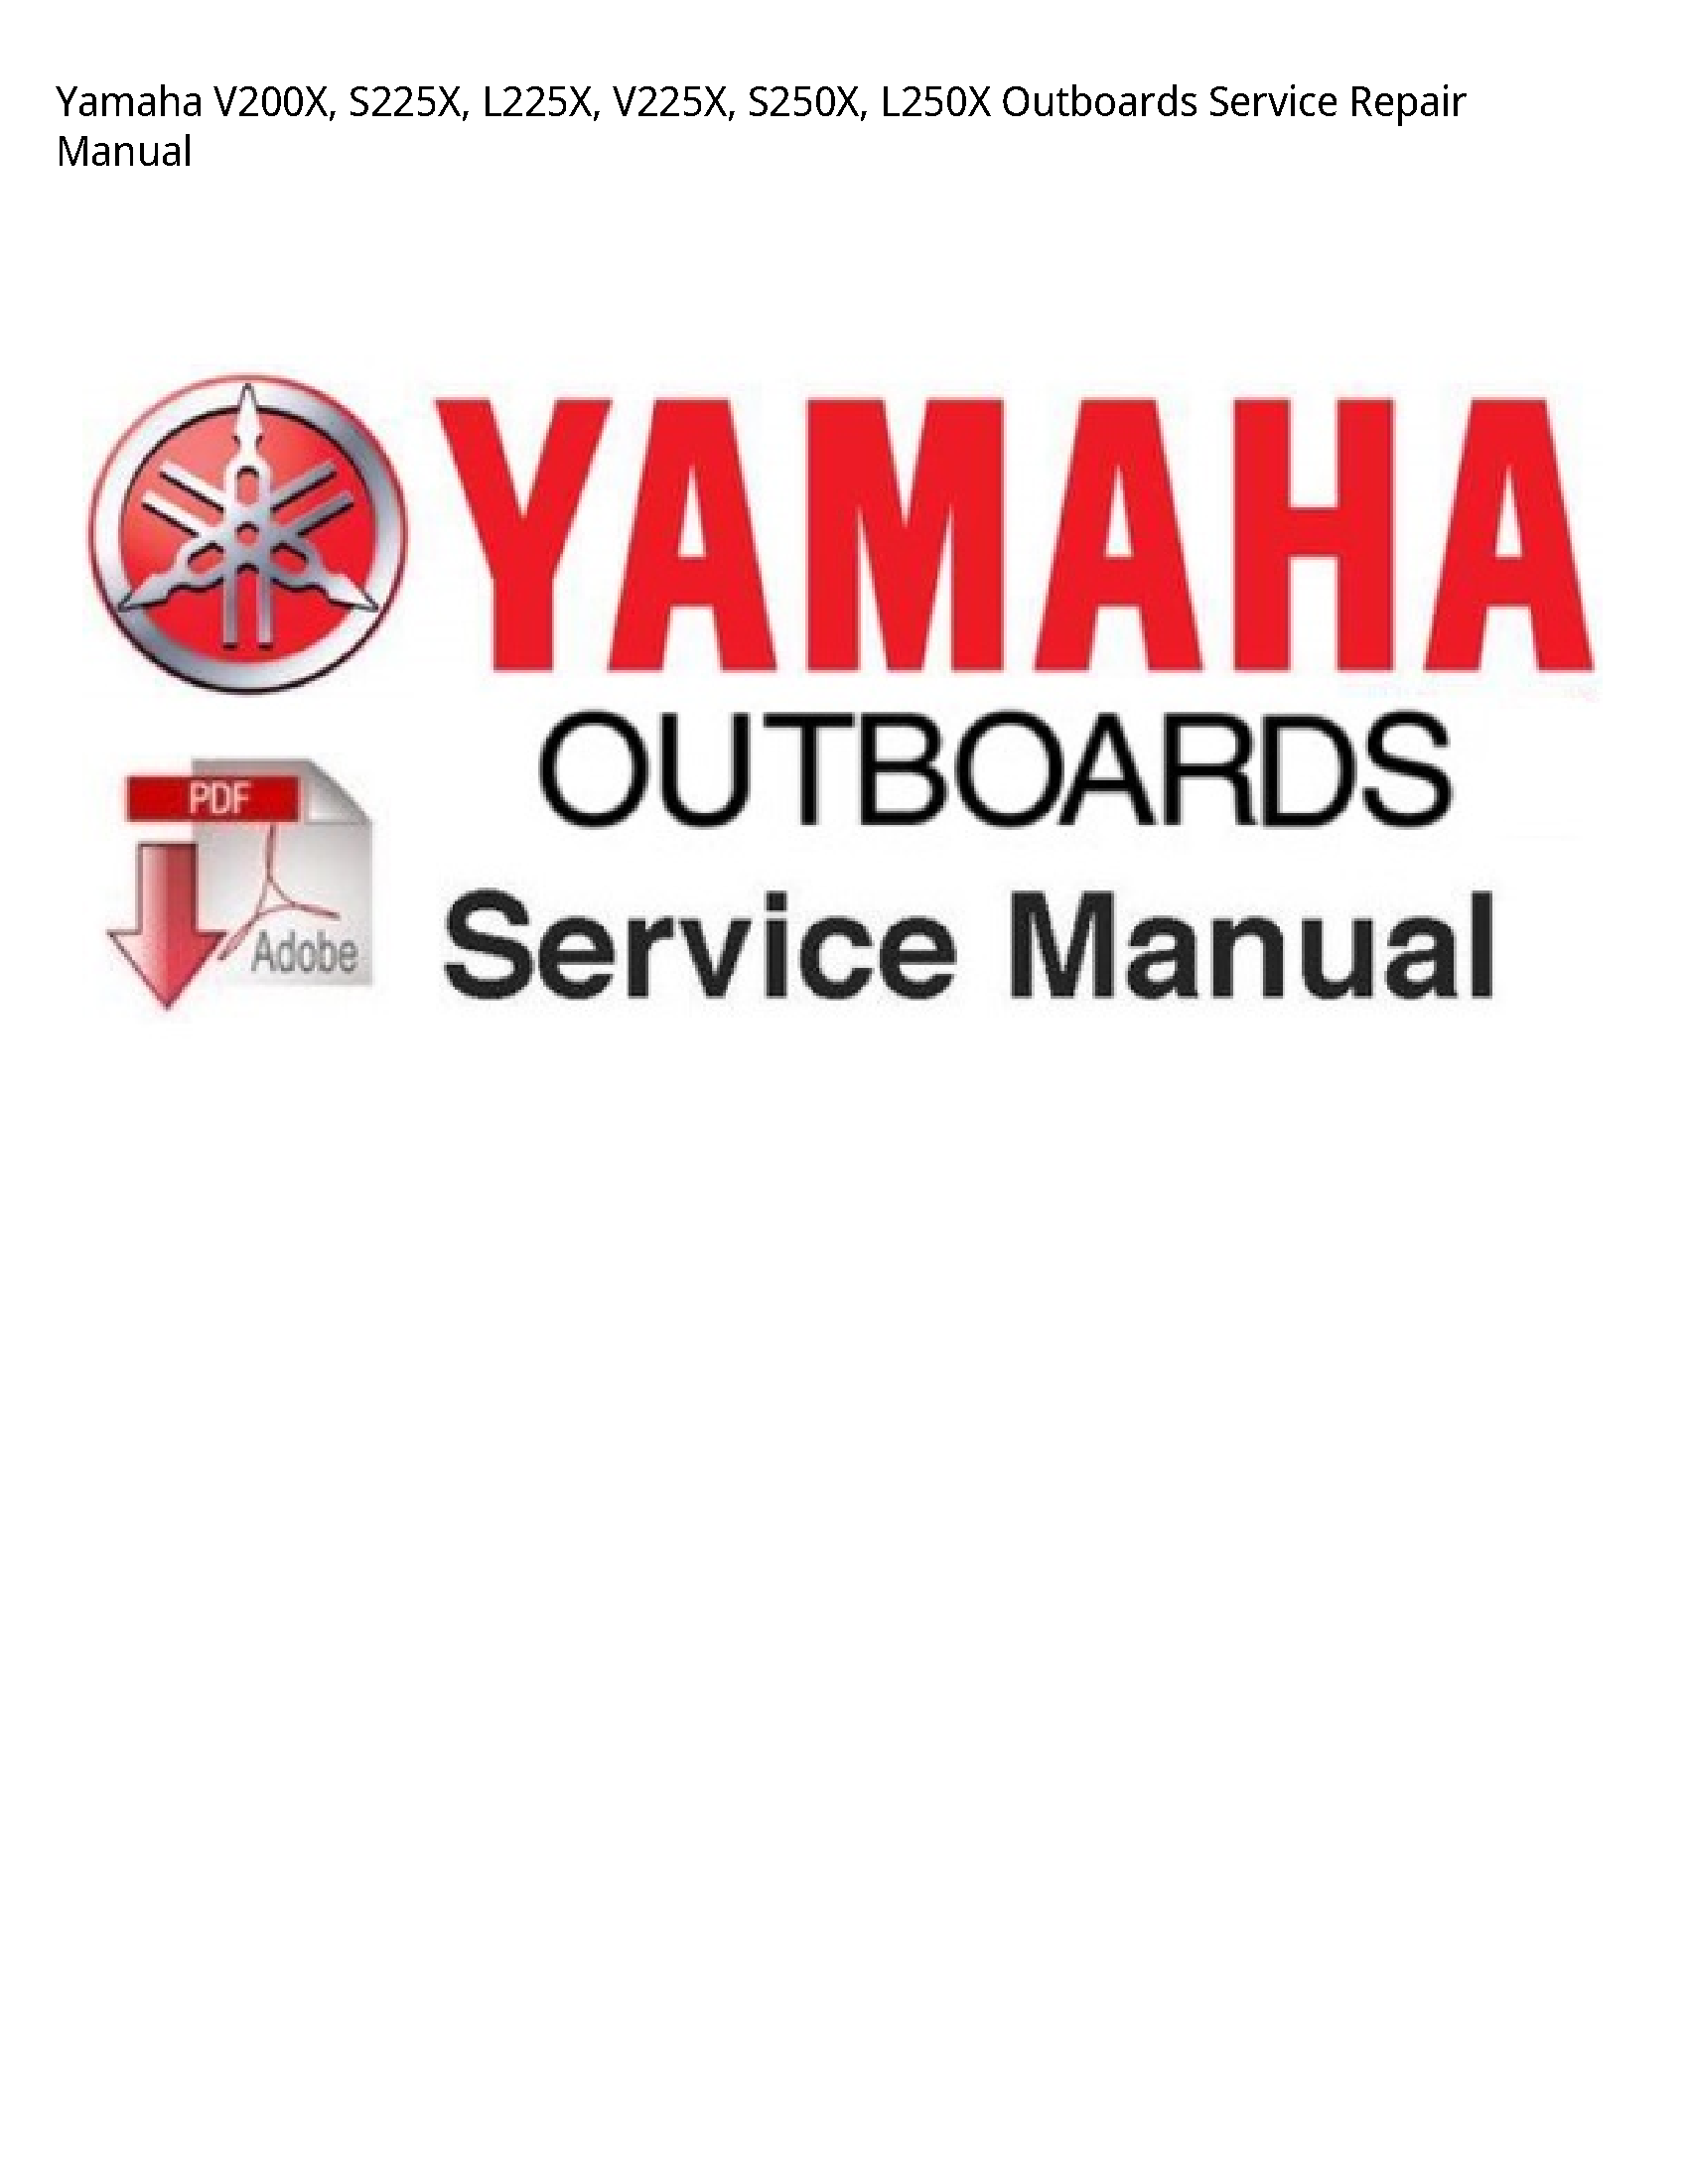 Yamaha V200X Outboards manual